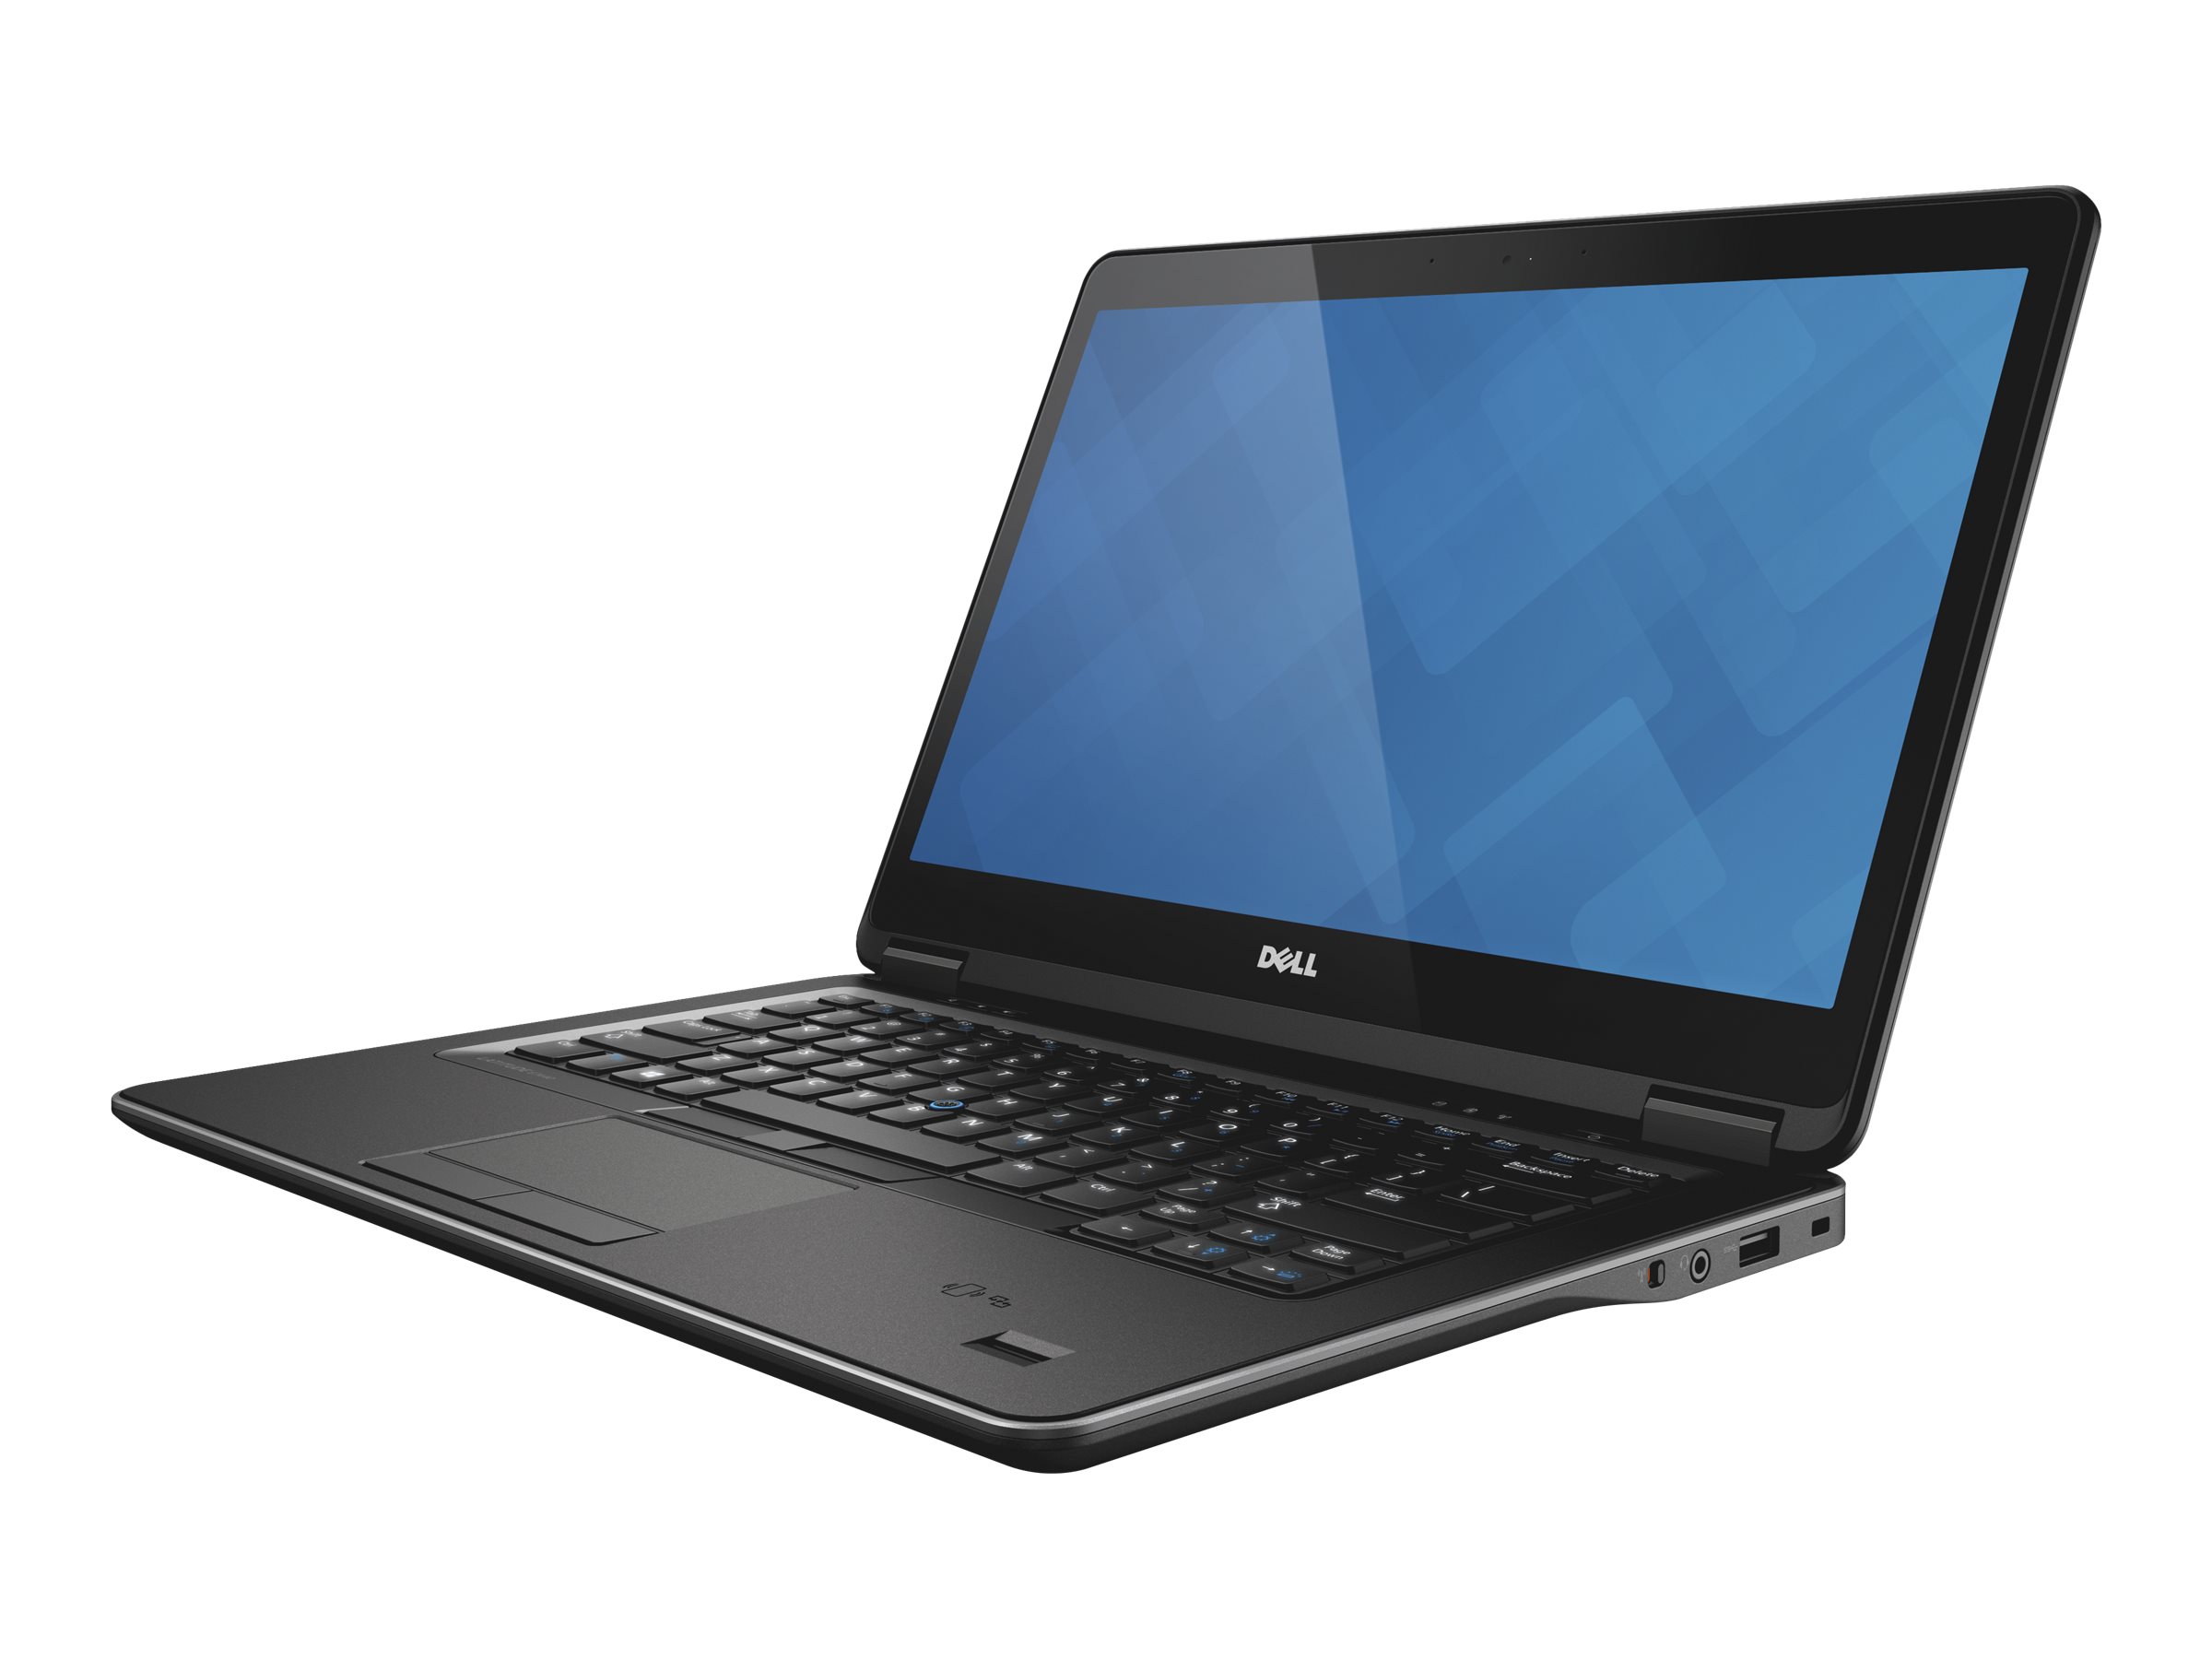 Used Dell E7440 14" Laptop, Windows 10 Home, Intel Core i5-4300U Processor, 8GB RAM, 500GB Solid State Drive - image 1 of 3